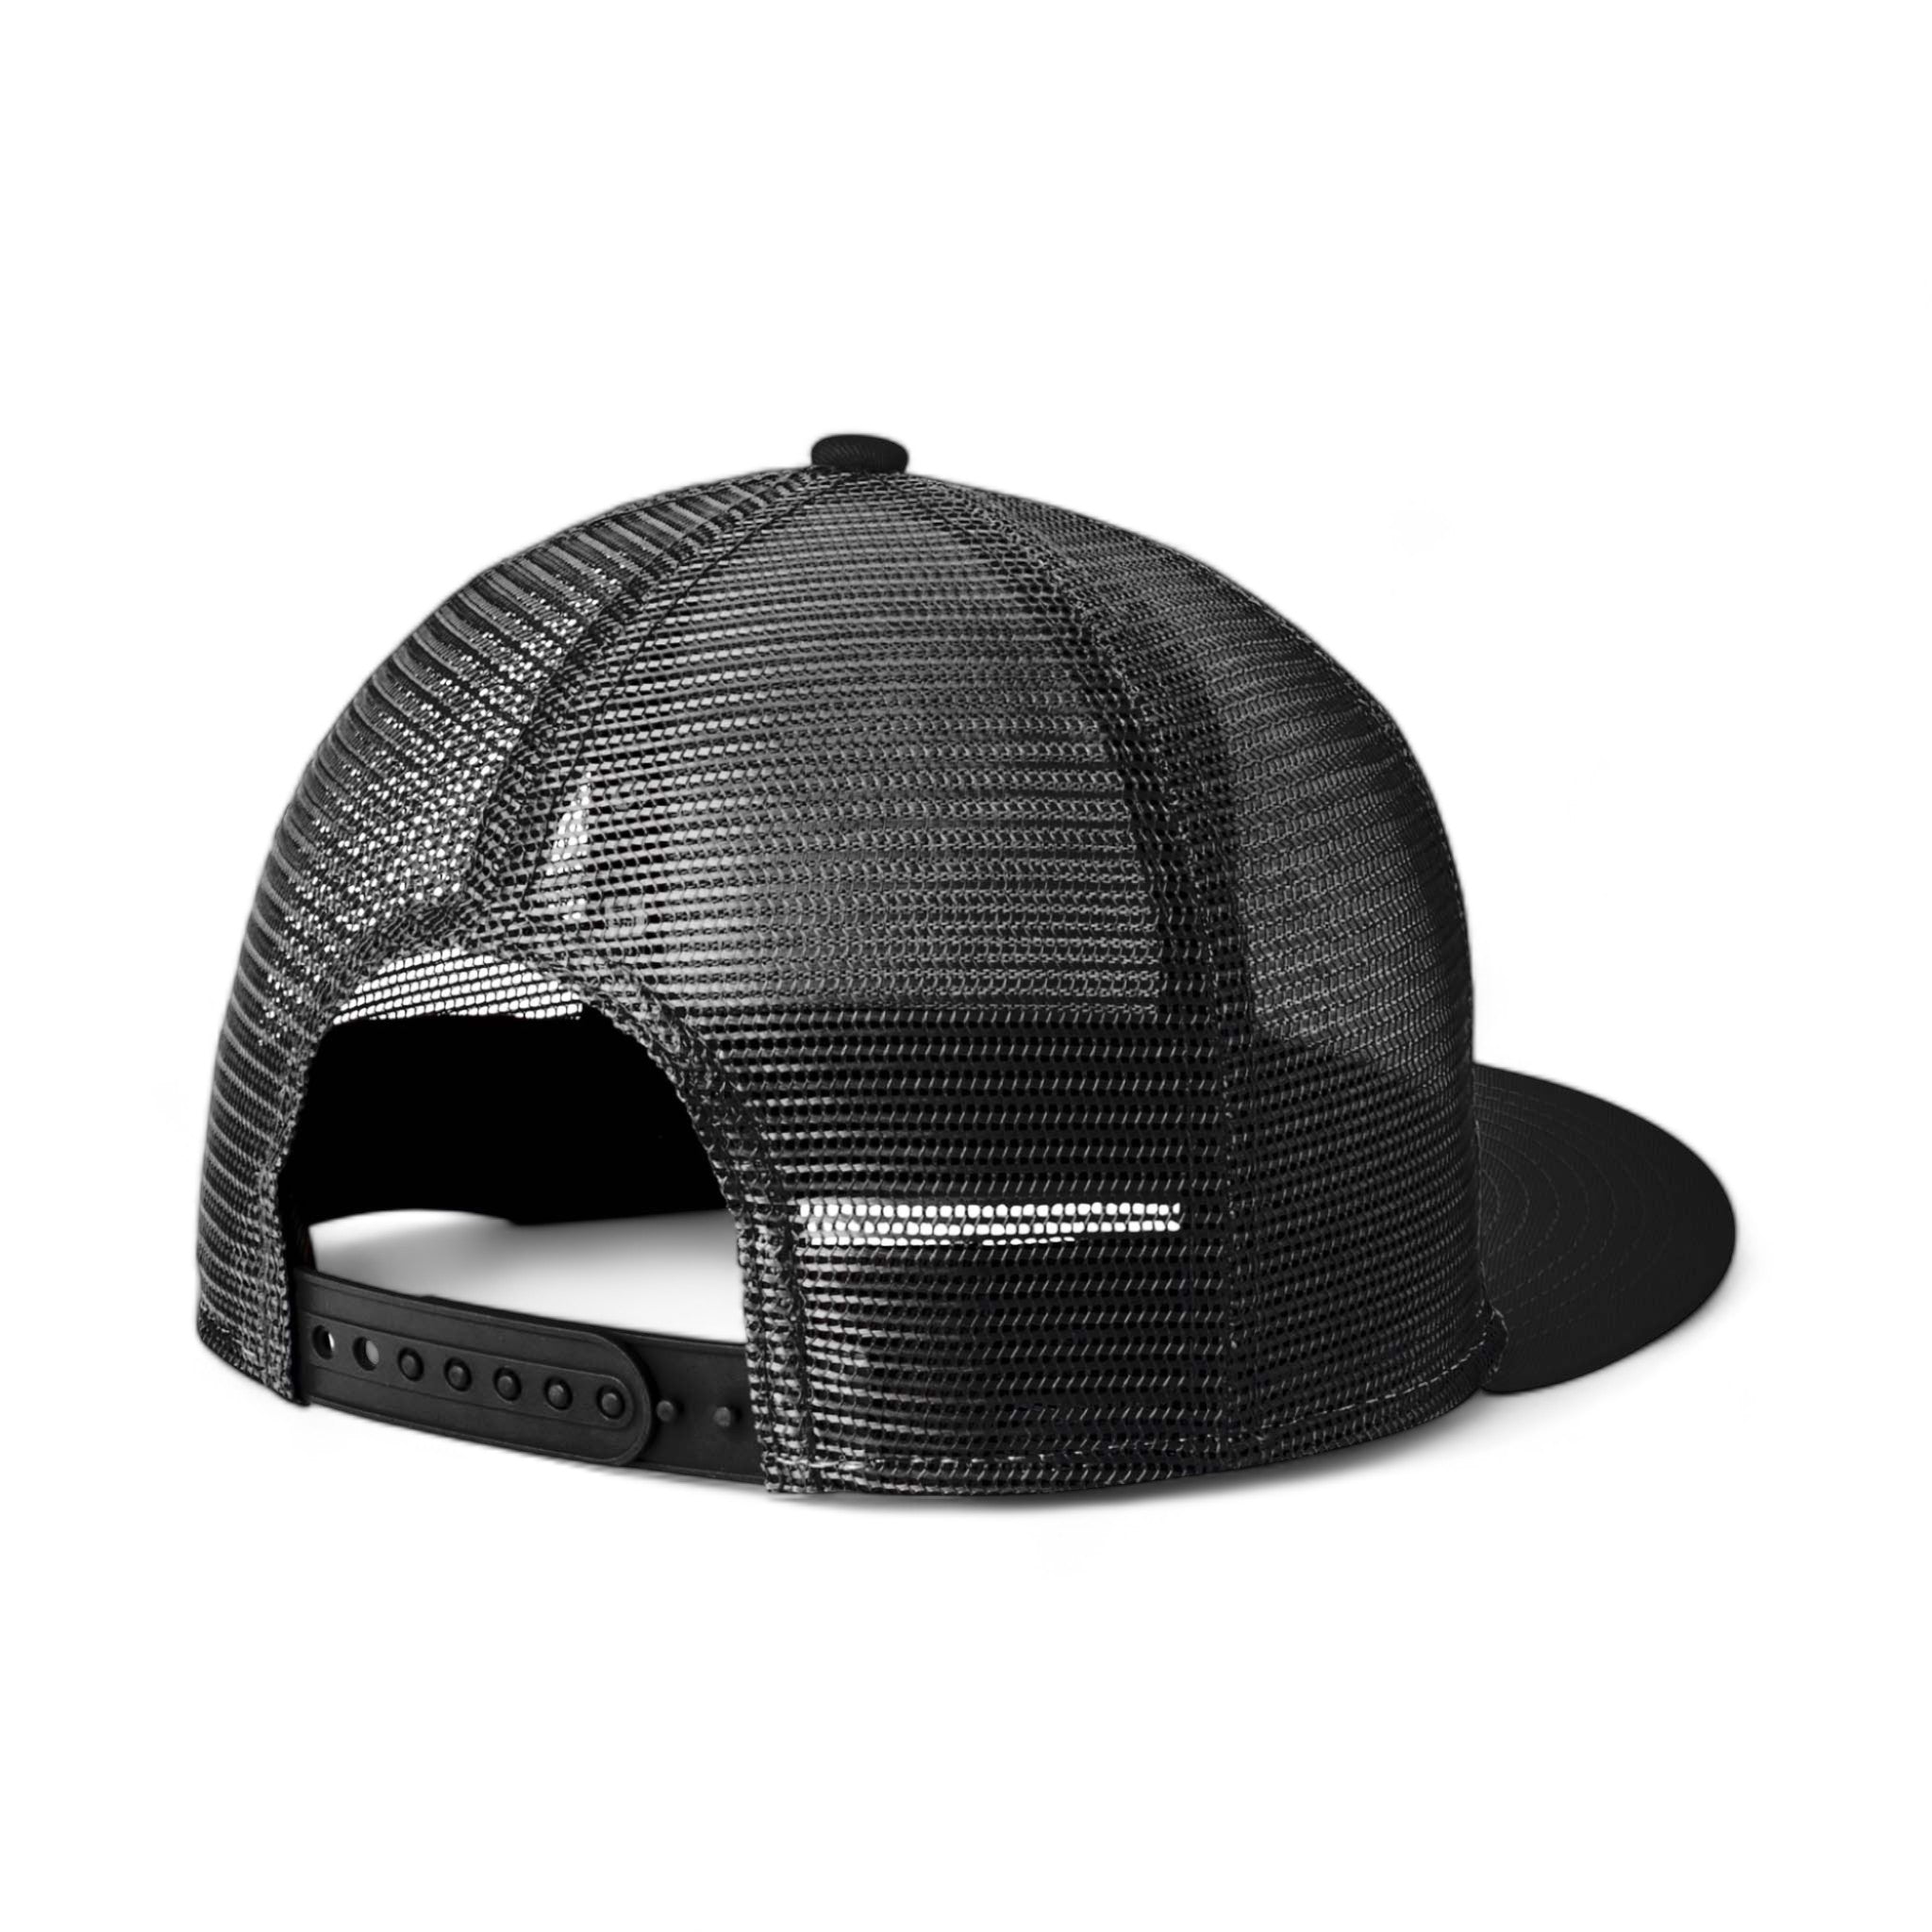 Back view of New Era NE4030 custom hat in black and black